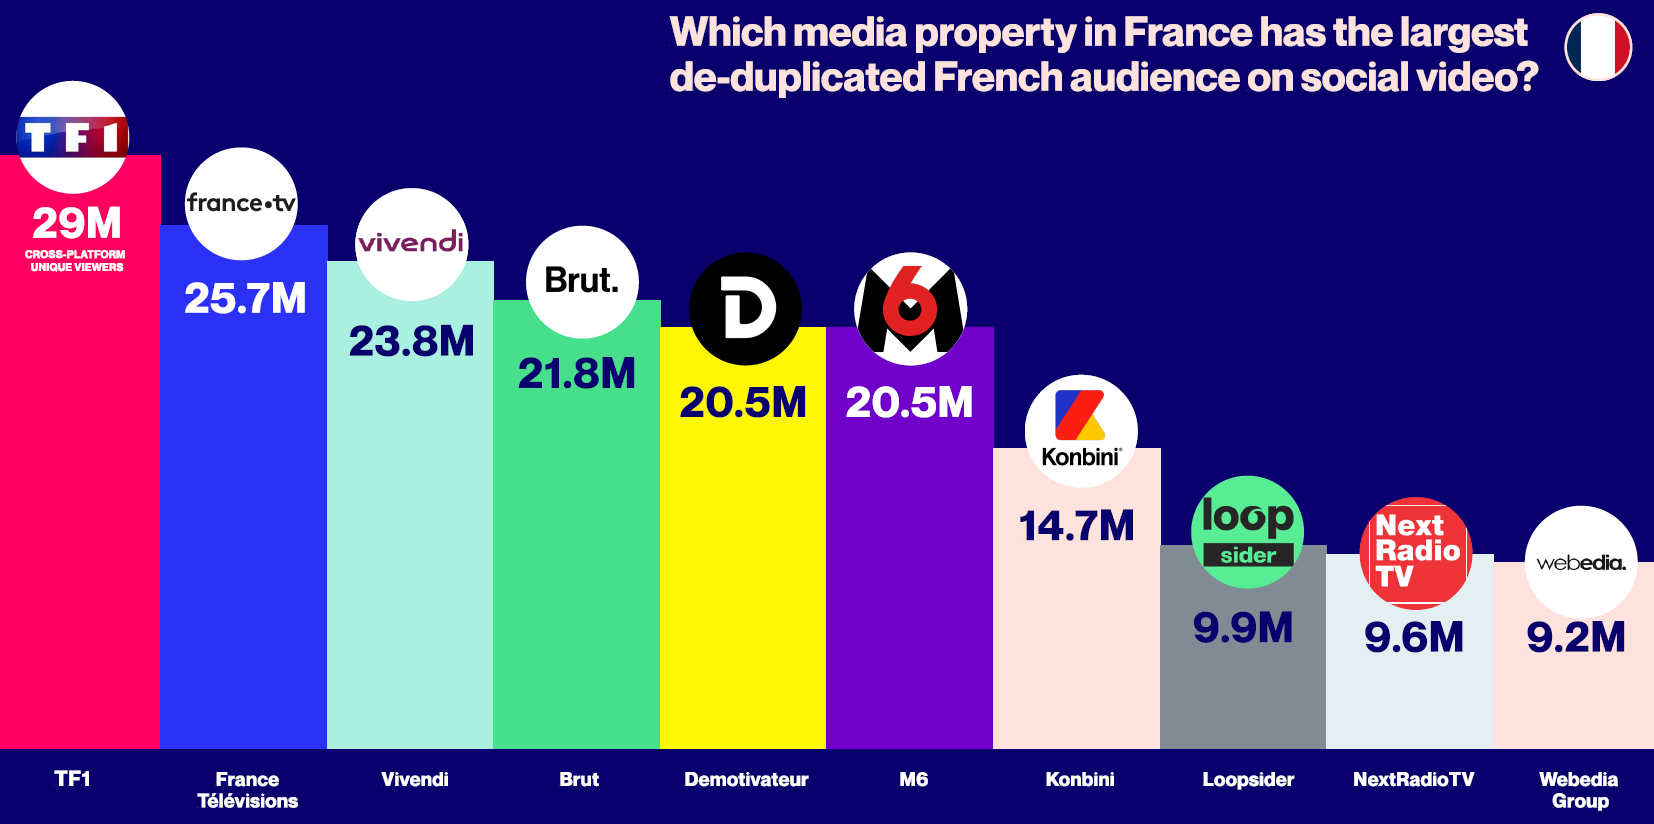 Top 10 Cross-Platform French Media Giants Based on True Audience Measurement